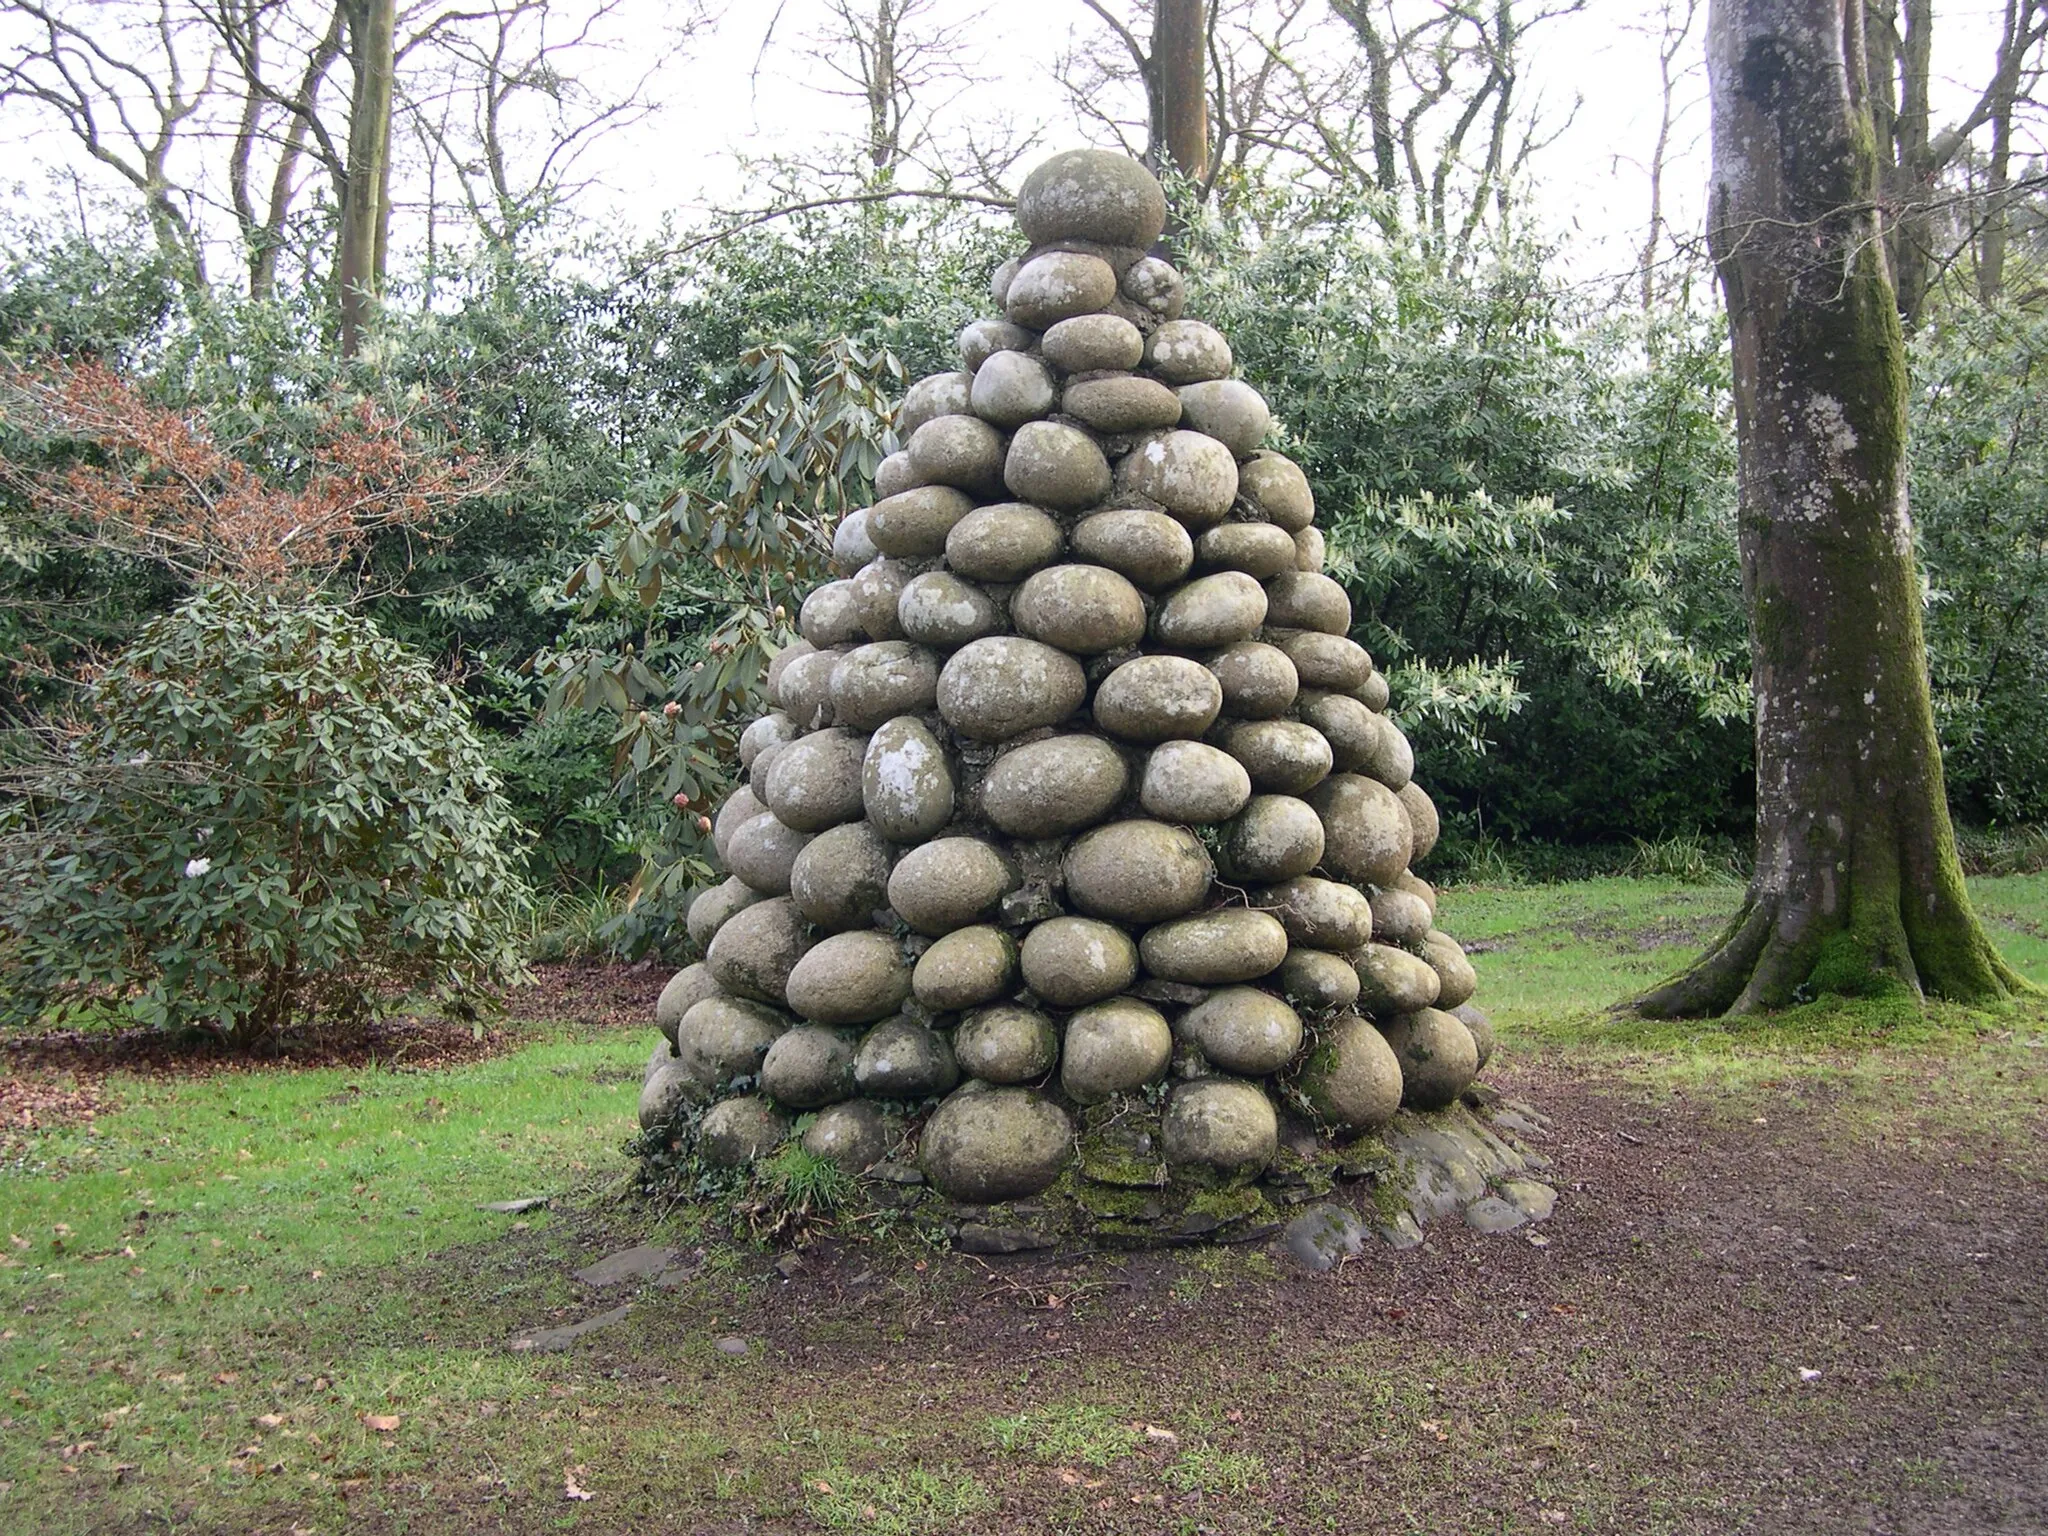 Photo showing: Arrangement of stones at Rowallane Garden
Credit: A Peter Clarke image